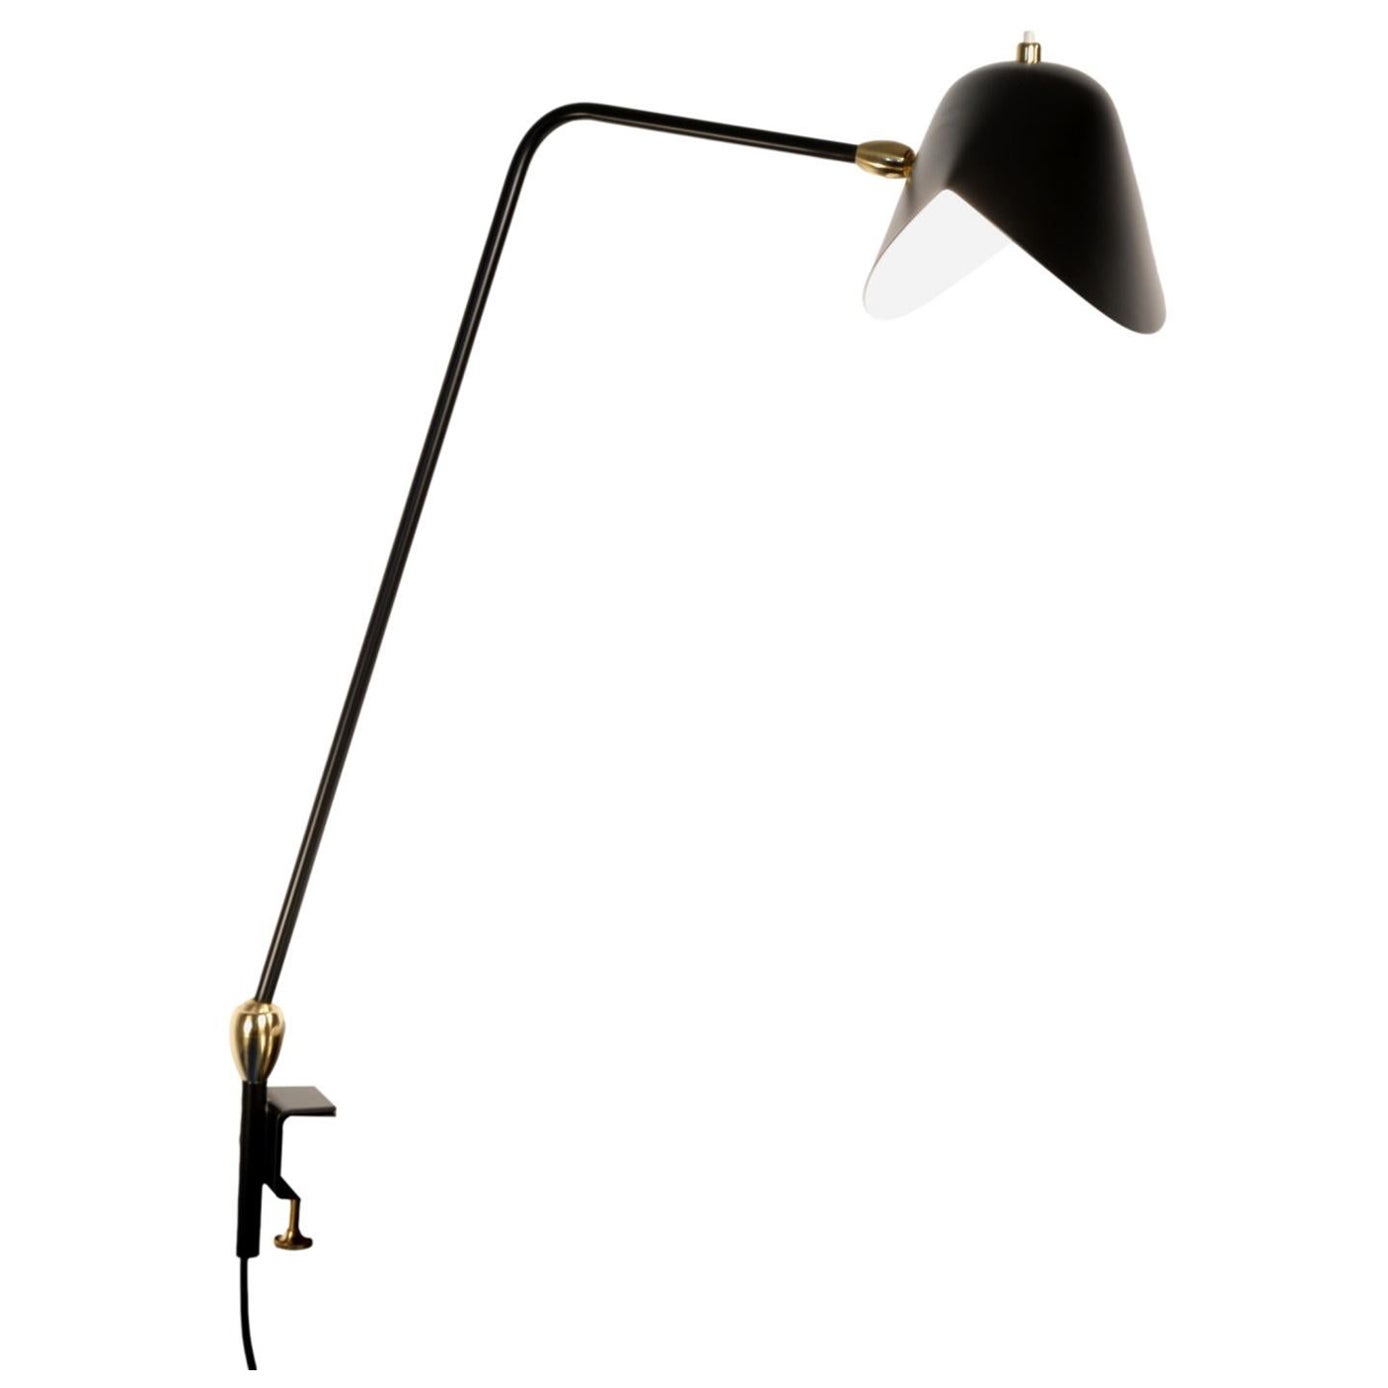 Serge Mouille Agrafee Desk Lamp, Double Swivel in Black, in Stock!